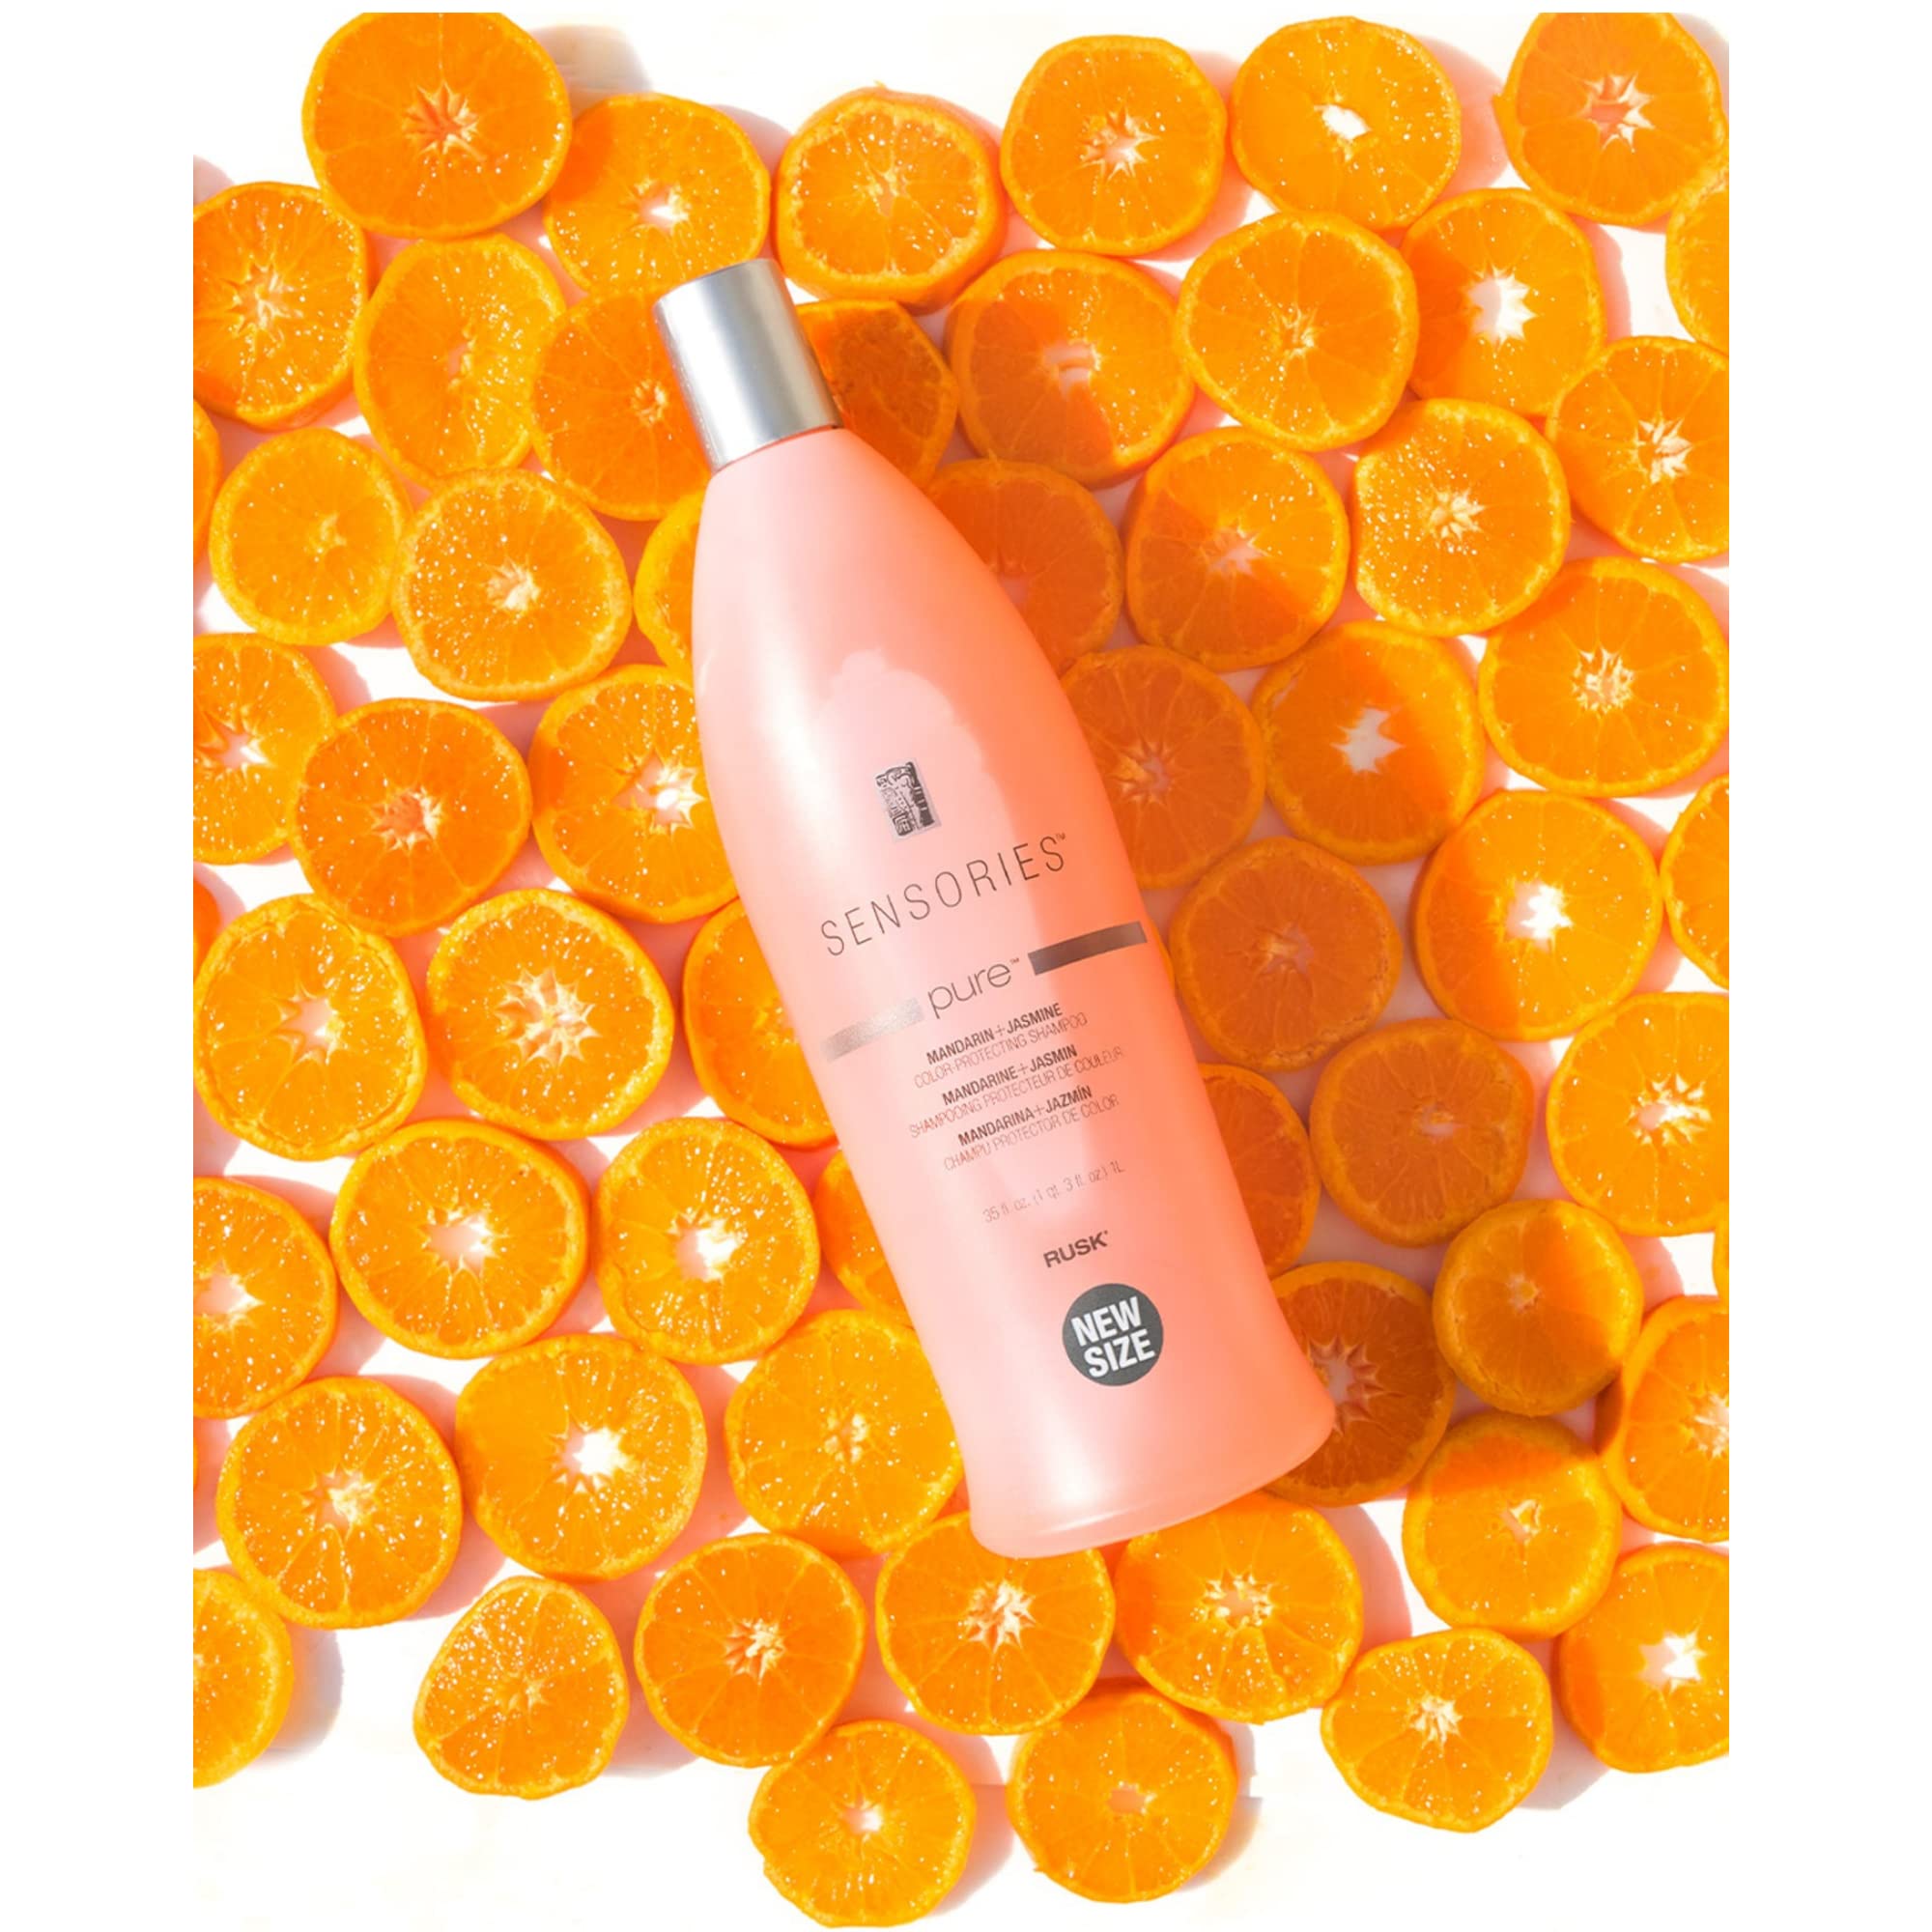 RUSK Sensories Pure Mandarin and Jasmine Vibrant Color Shampoo, 35 fl. oz.